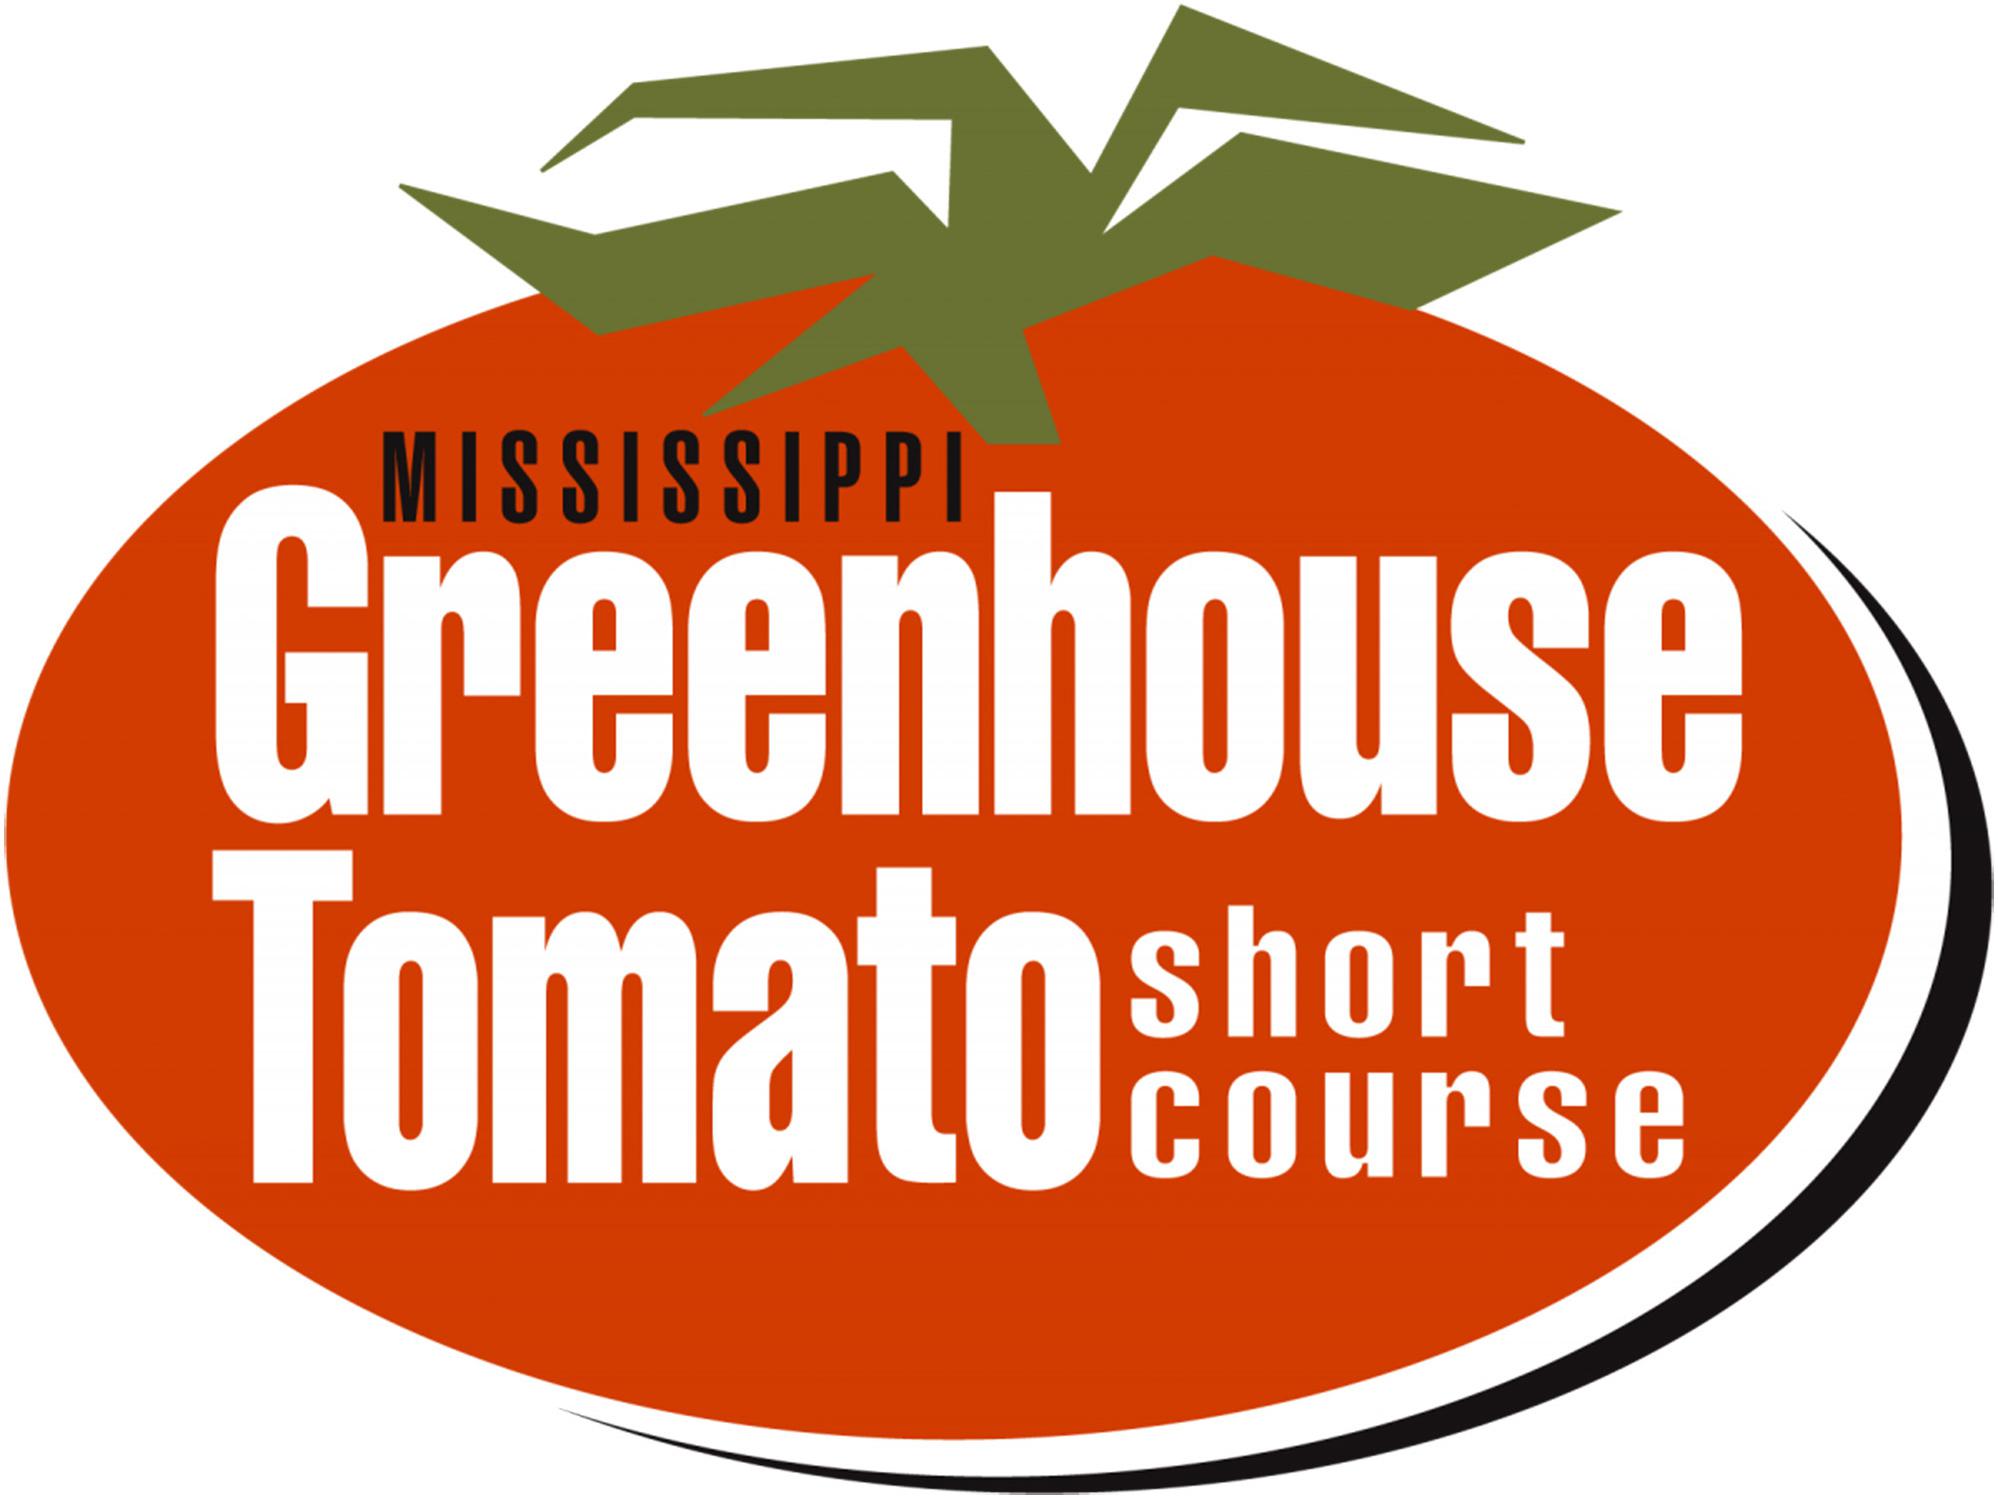 Mississippi Greenhouse Tomato Short Course logo